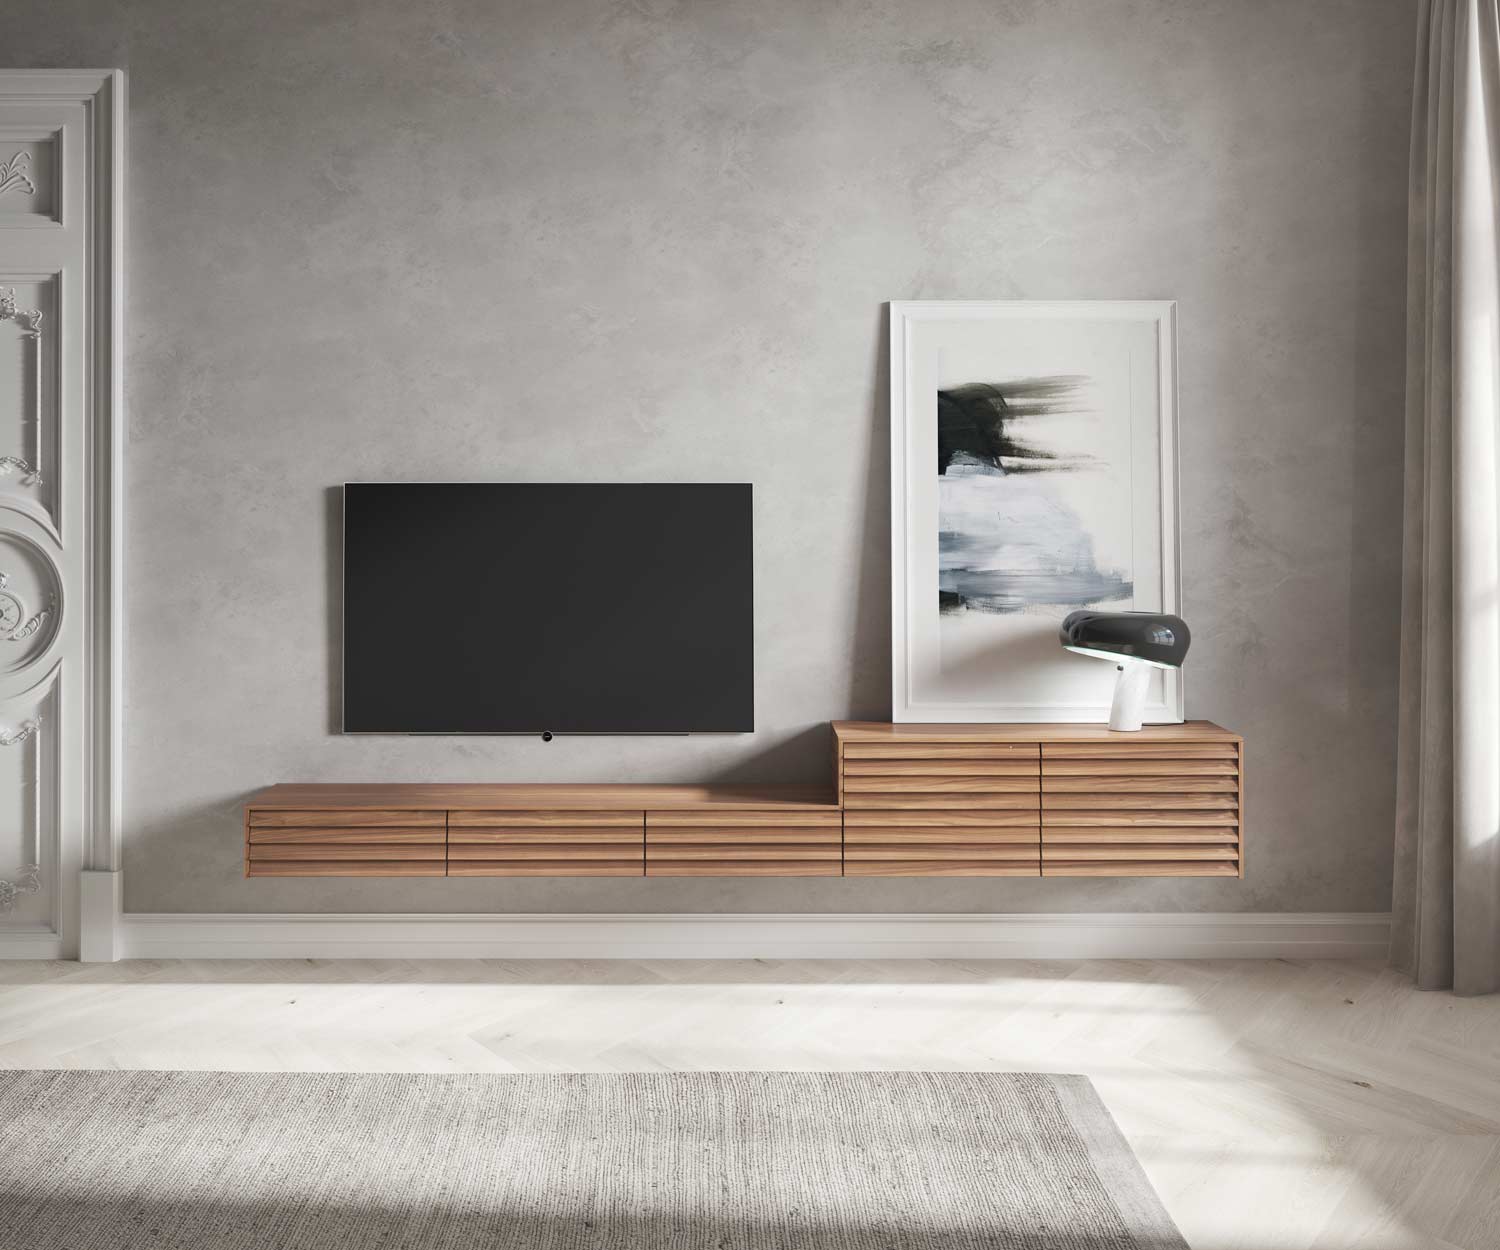 Punt Configuratore di Sussex Design: lavagna di design sospesa a parete con TV